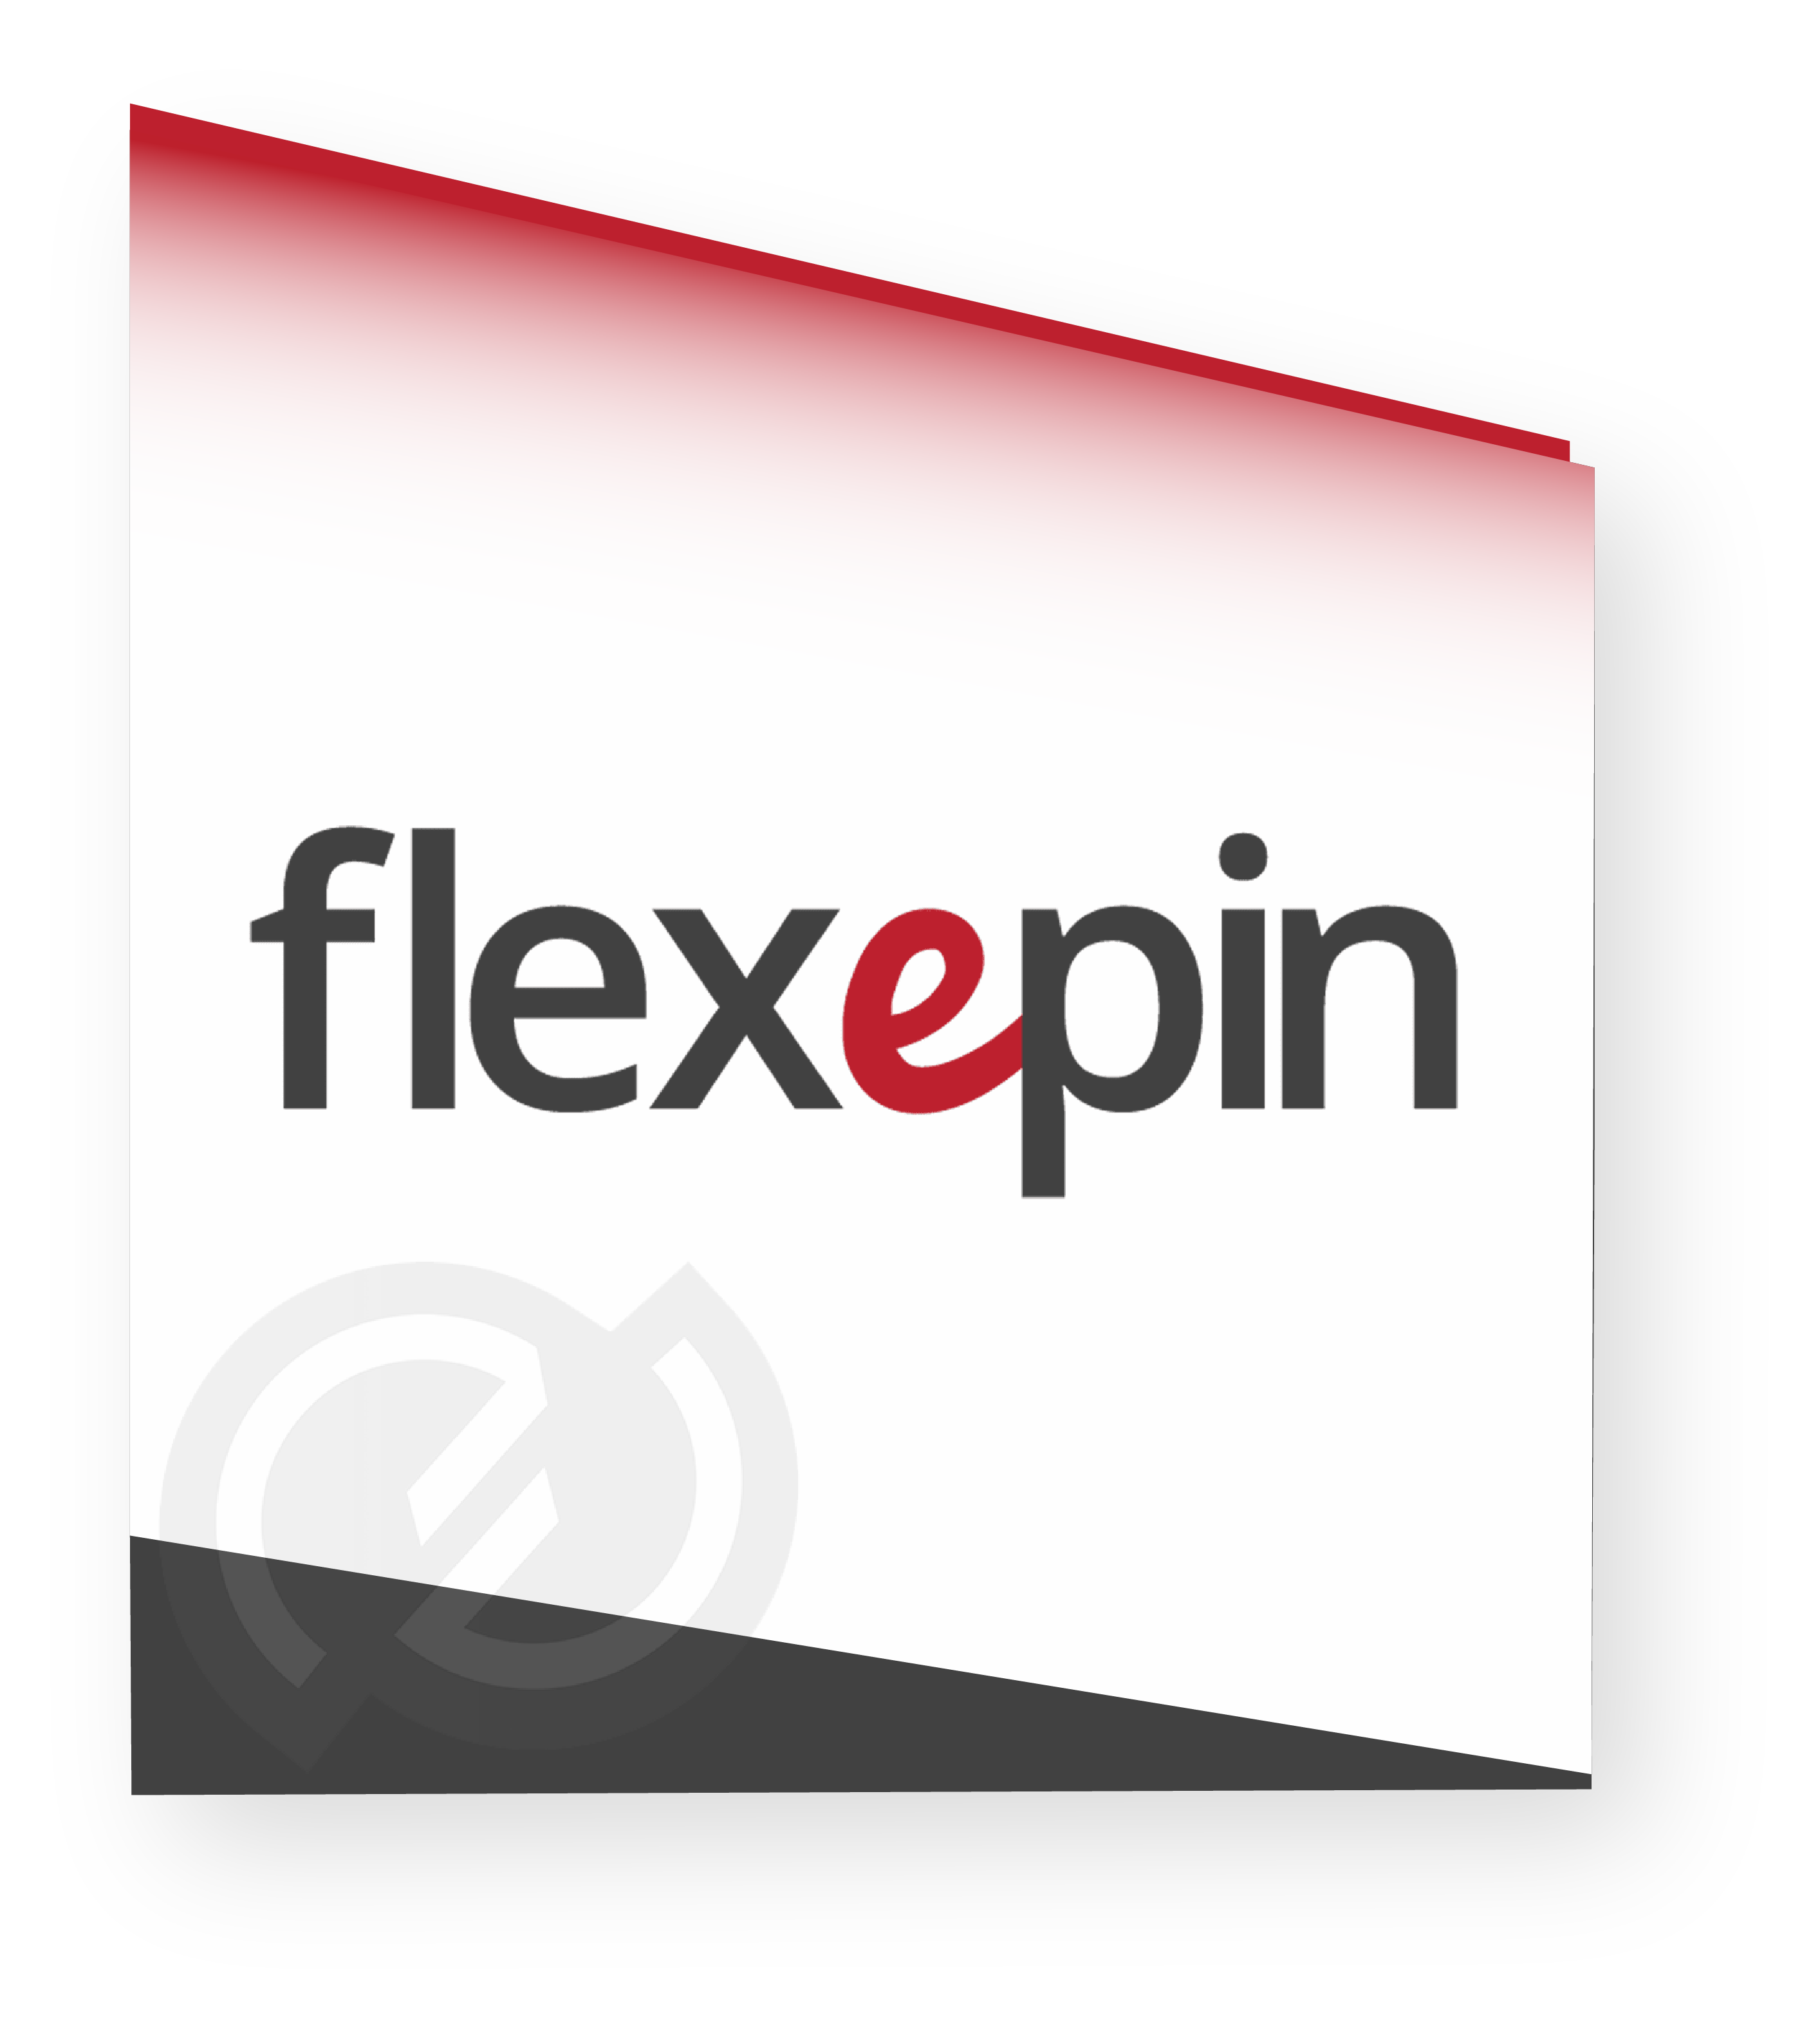 Image logo Flexepin